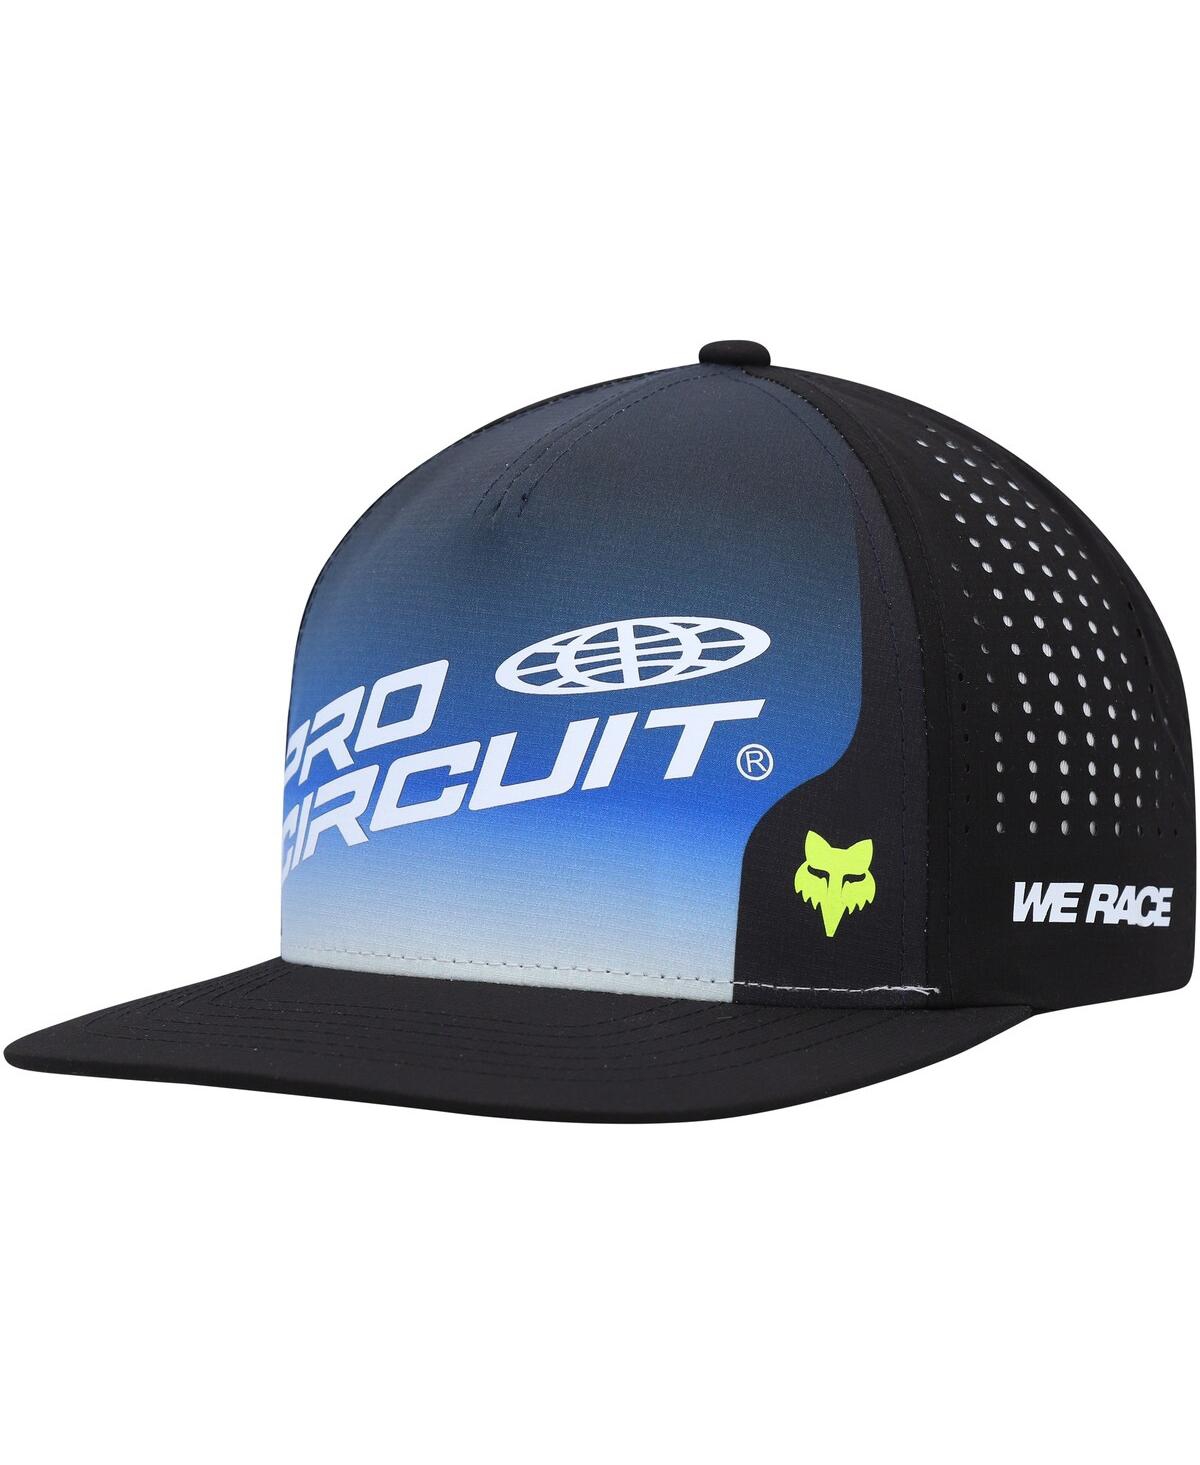 Men's Fox Blue, Black Foyl Pro Circuit Adjustable Snapback Hat - Blue, Black